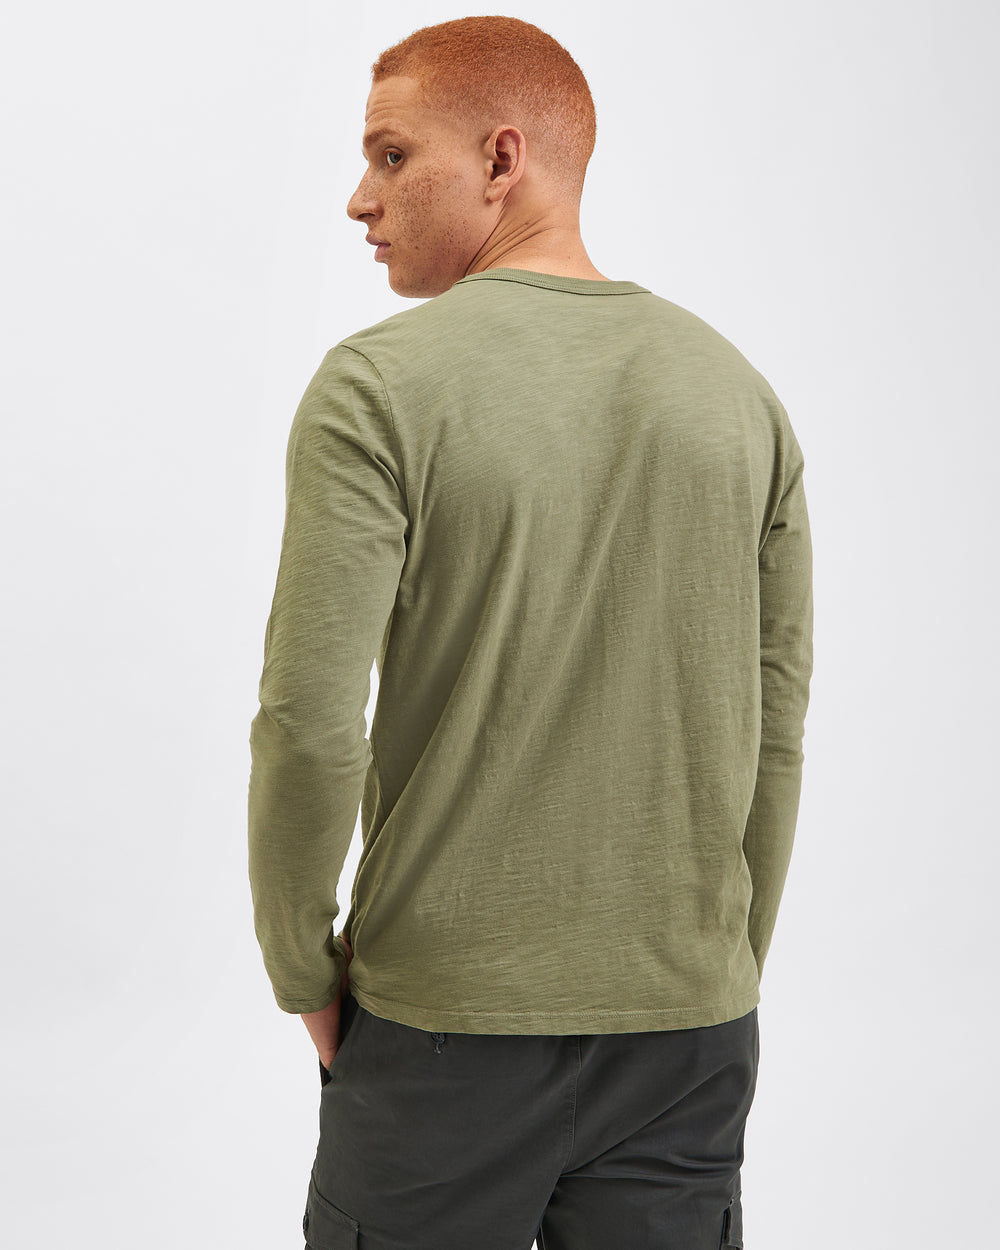 Garment Dye Beatnik Long-Sleeve T-Shirt - Olive Green